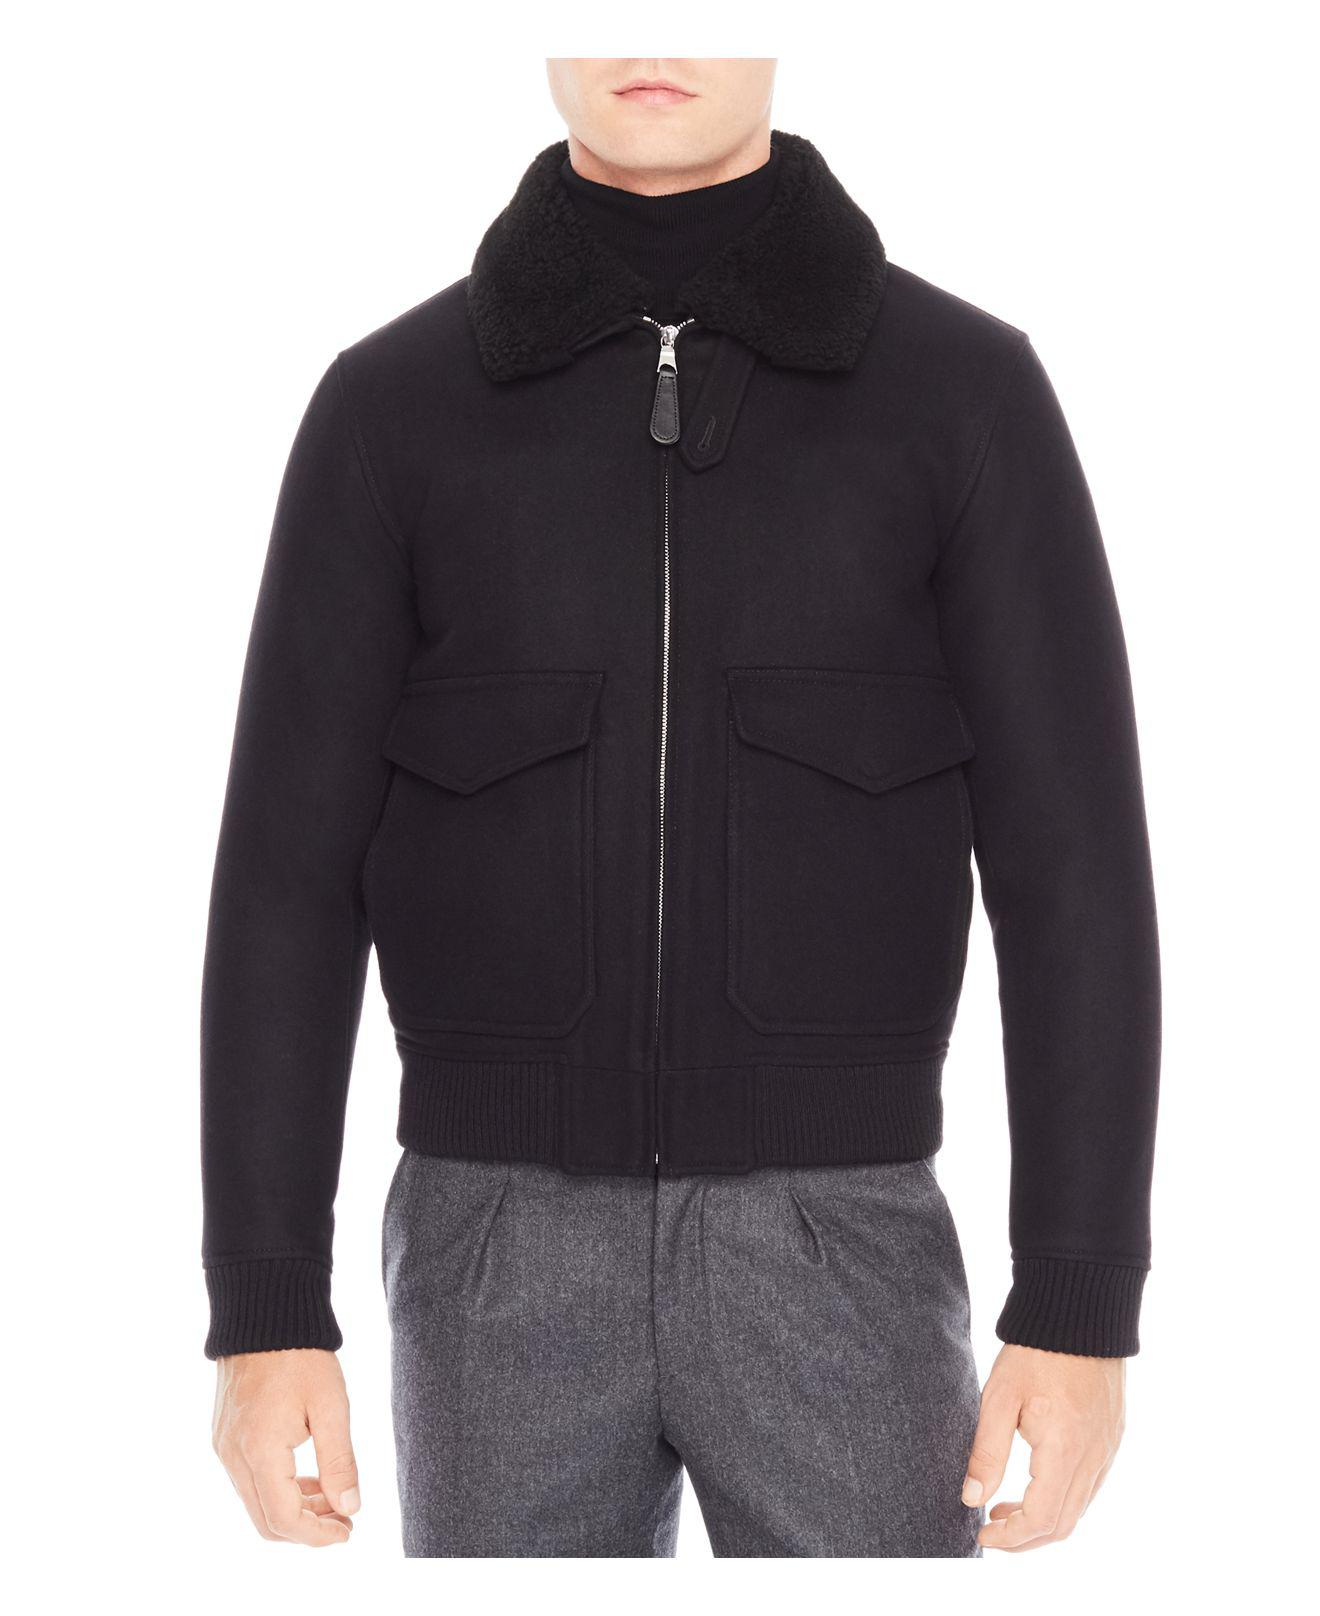 Lyst - Sandro Shearling Collar Aviator Jacket in Black for Men